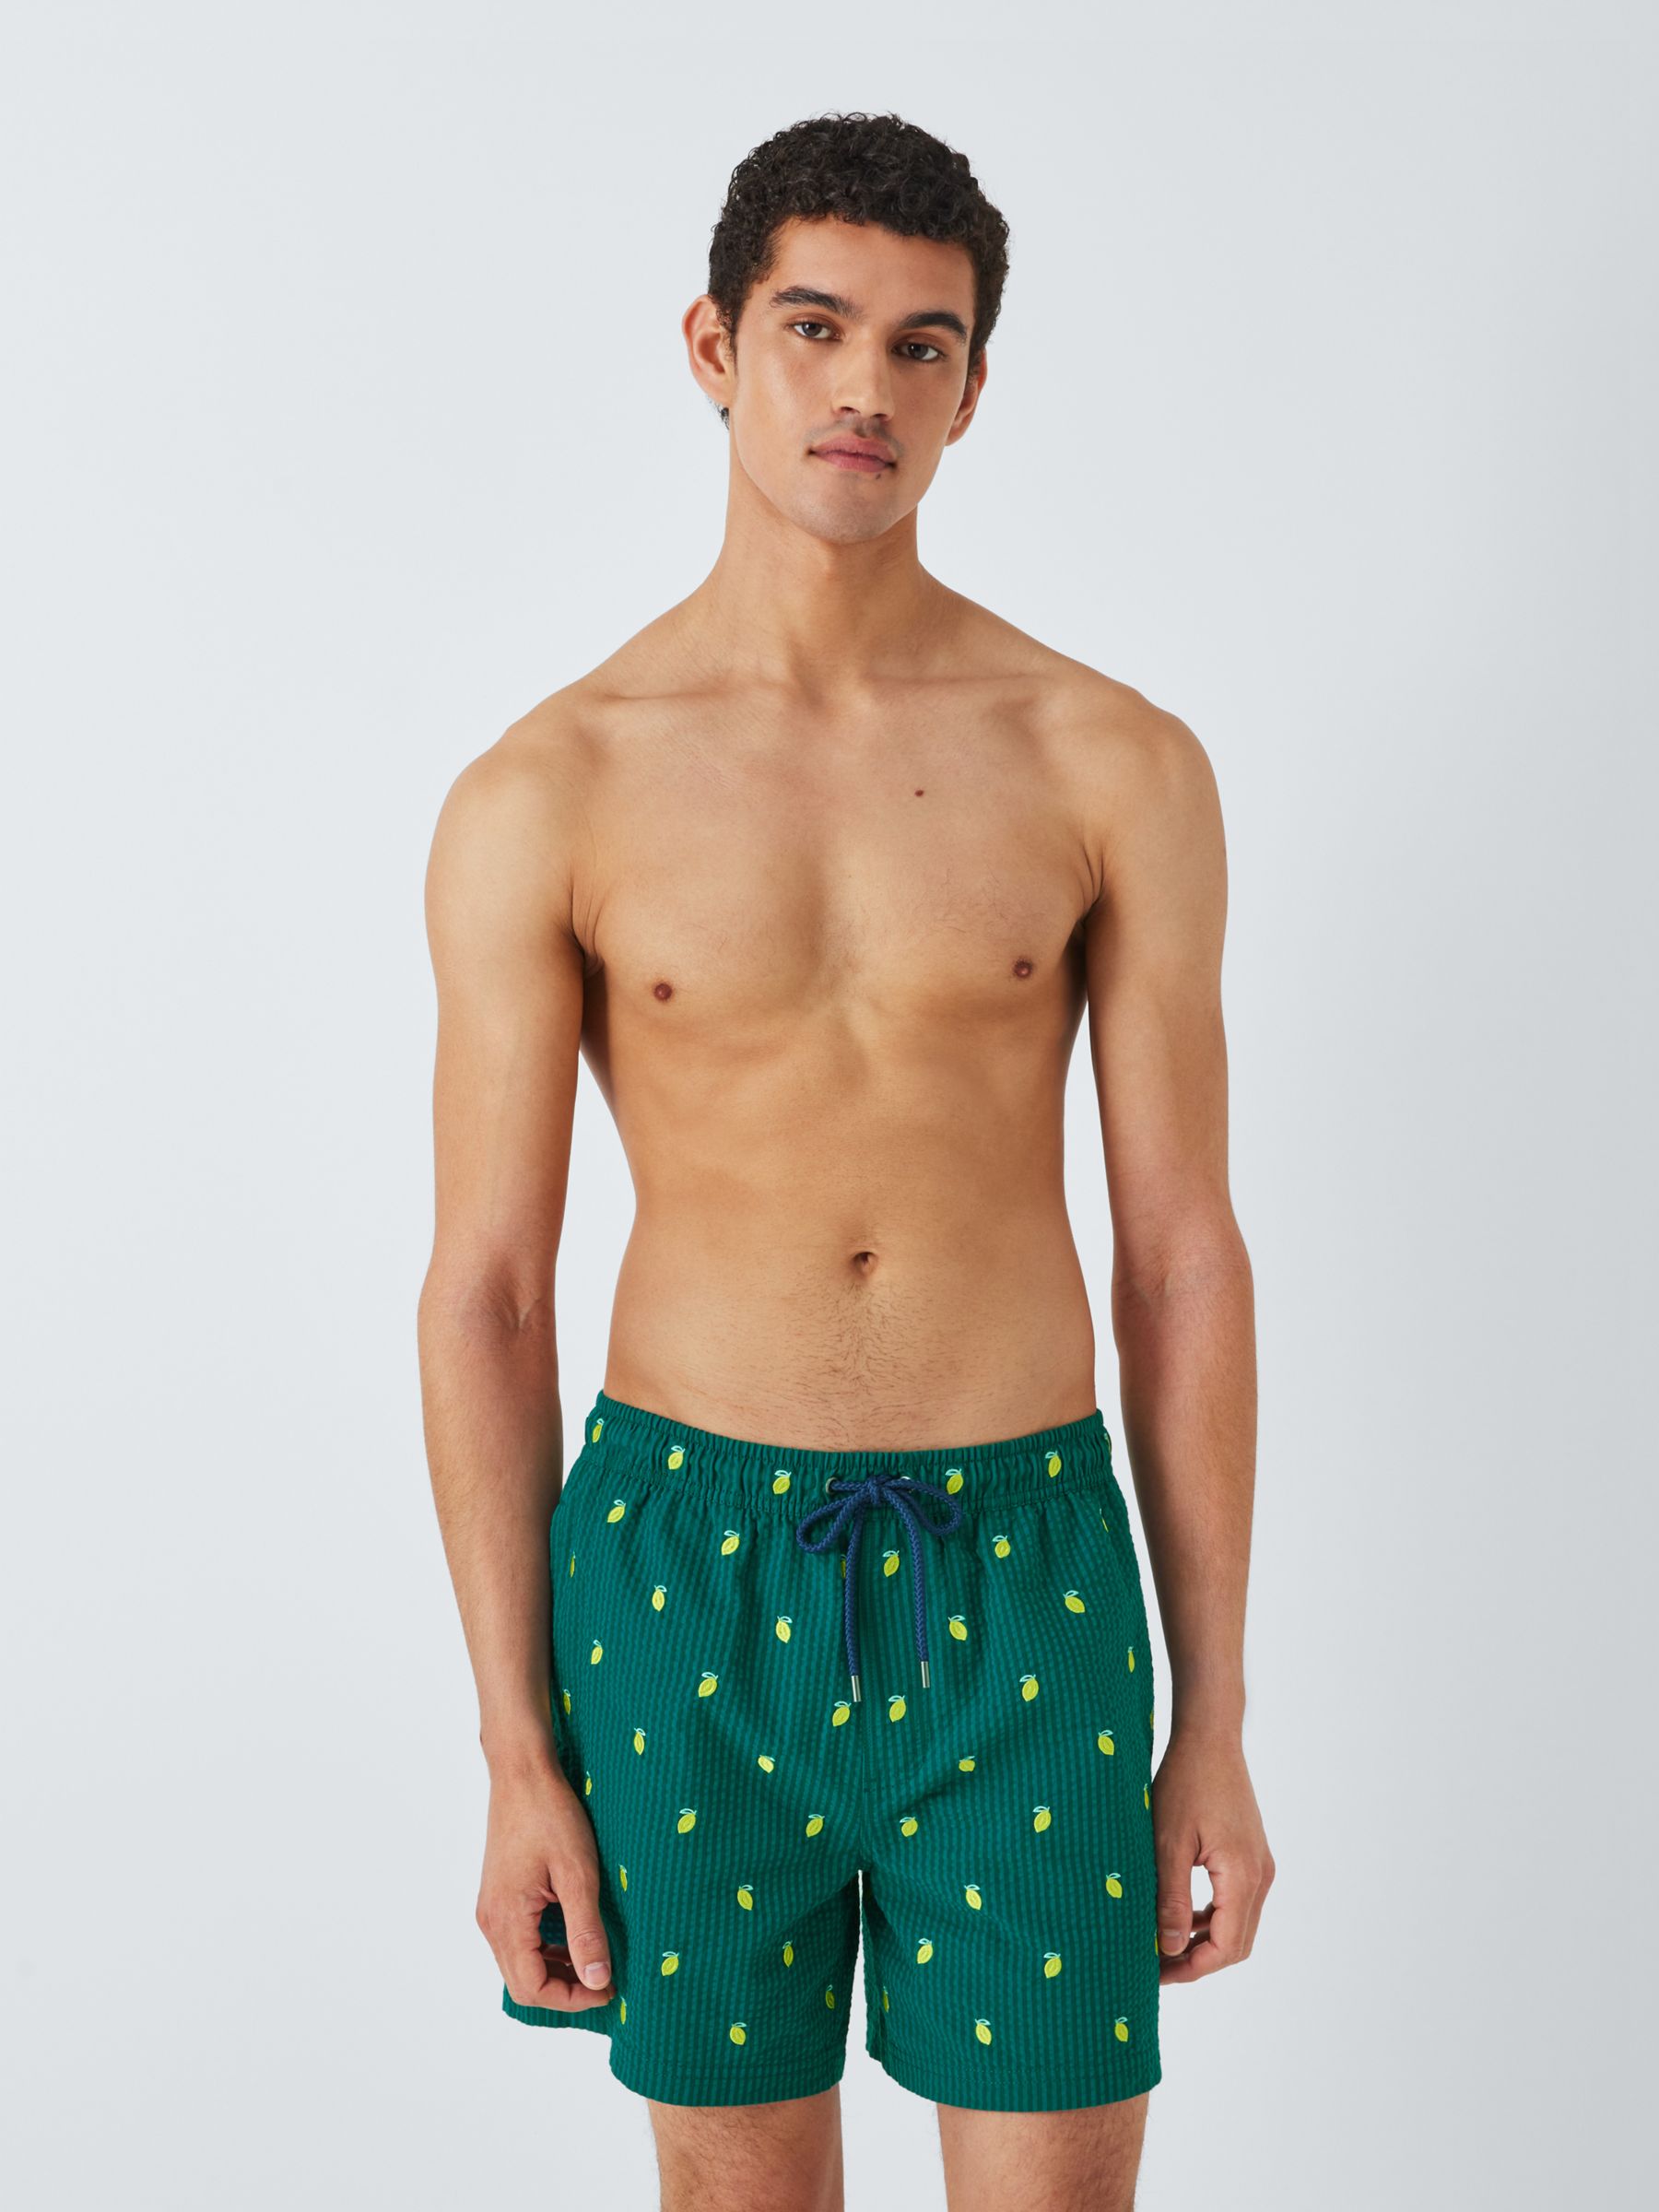 John Lewis Embroidered Seersucker Lemon Swim Shorts, Green/Multi, S